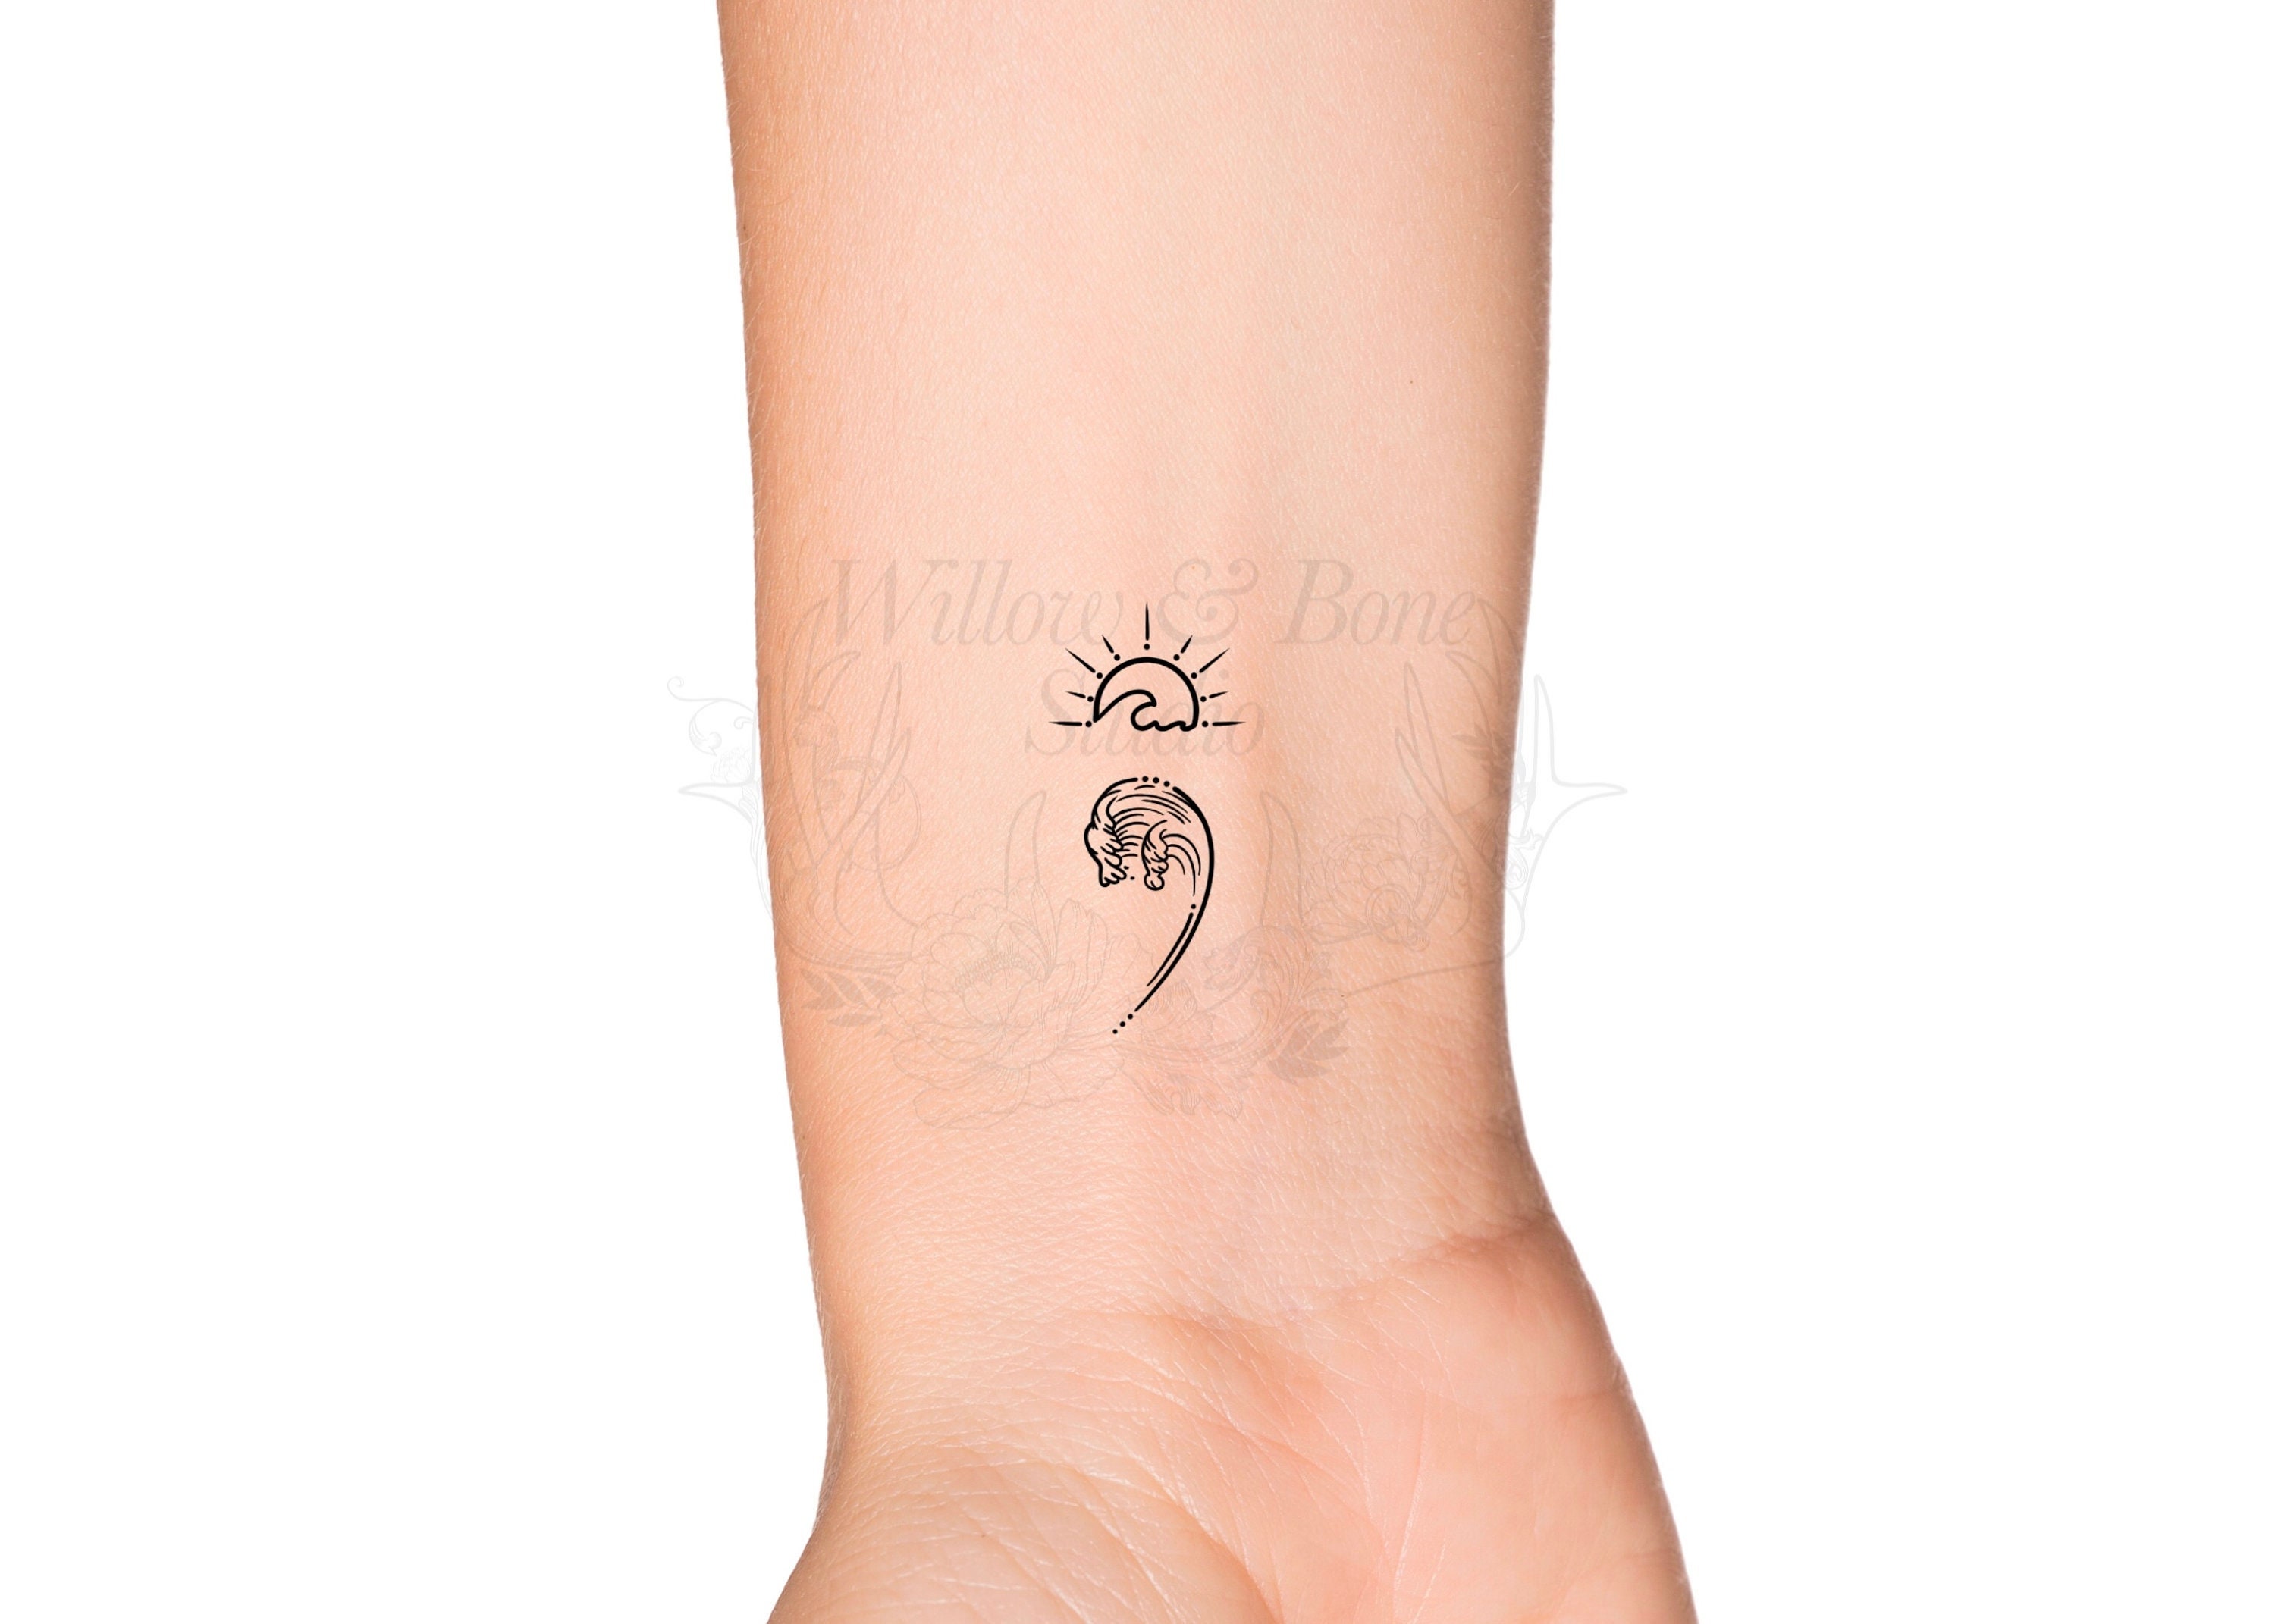 30 classy wrist tattoo designs and meaningful ideas for ladies - Tuko.co.ke